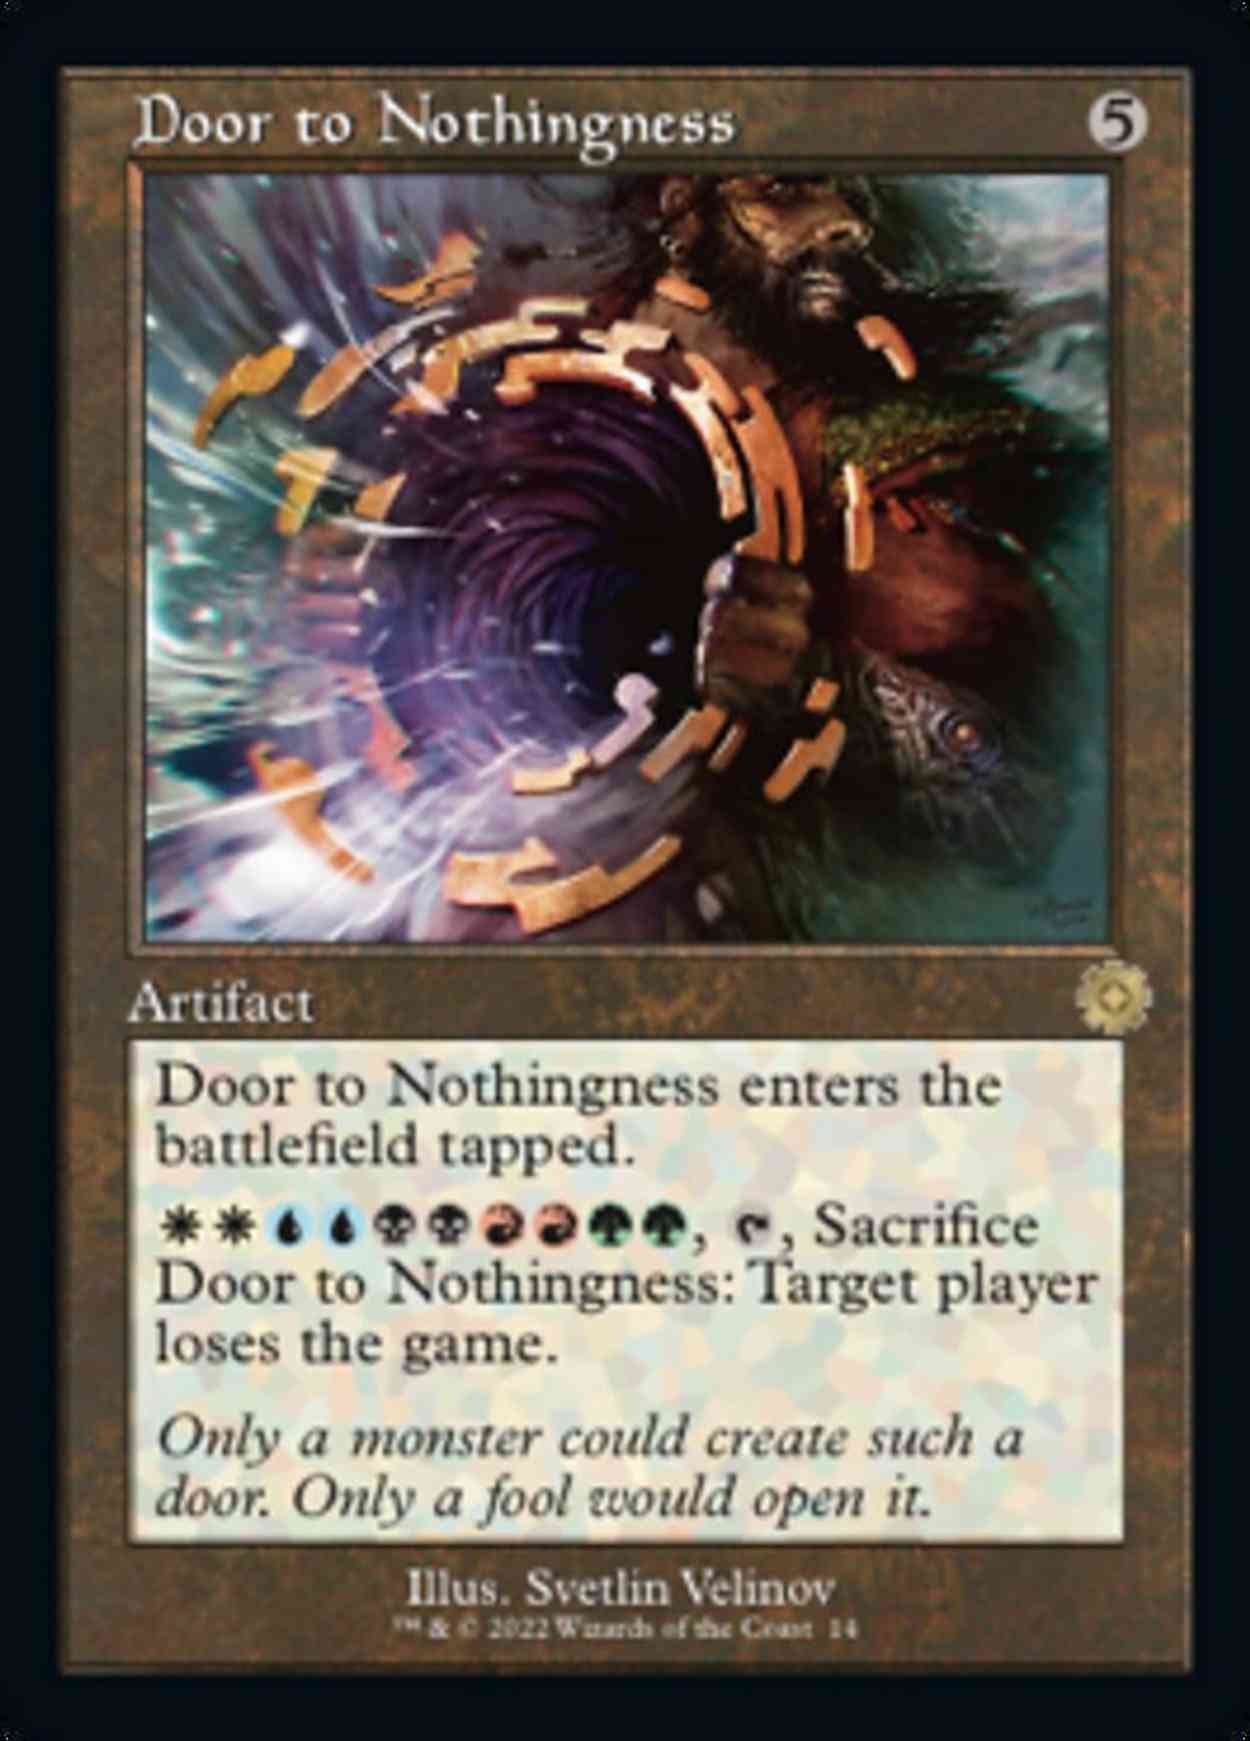 Door to Nothingness magic card front